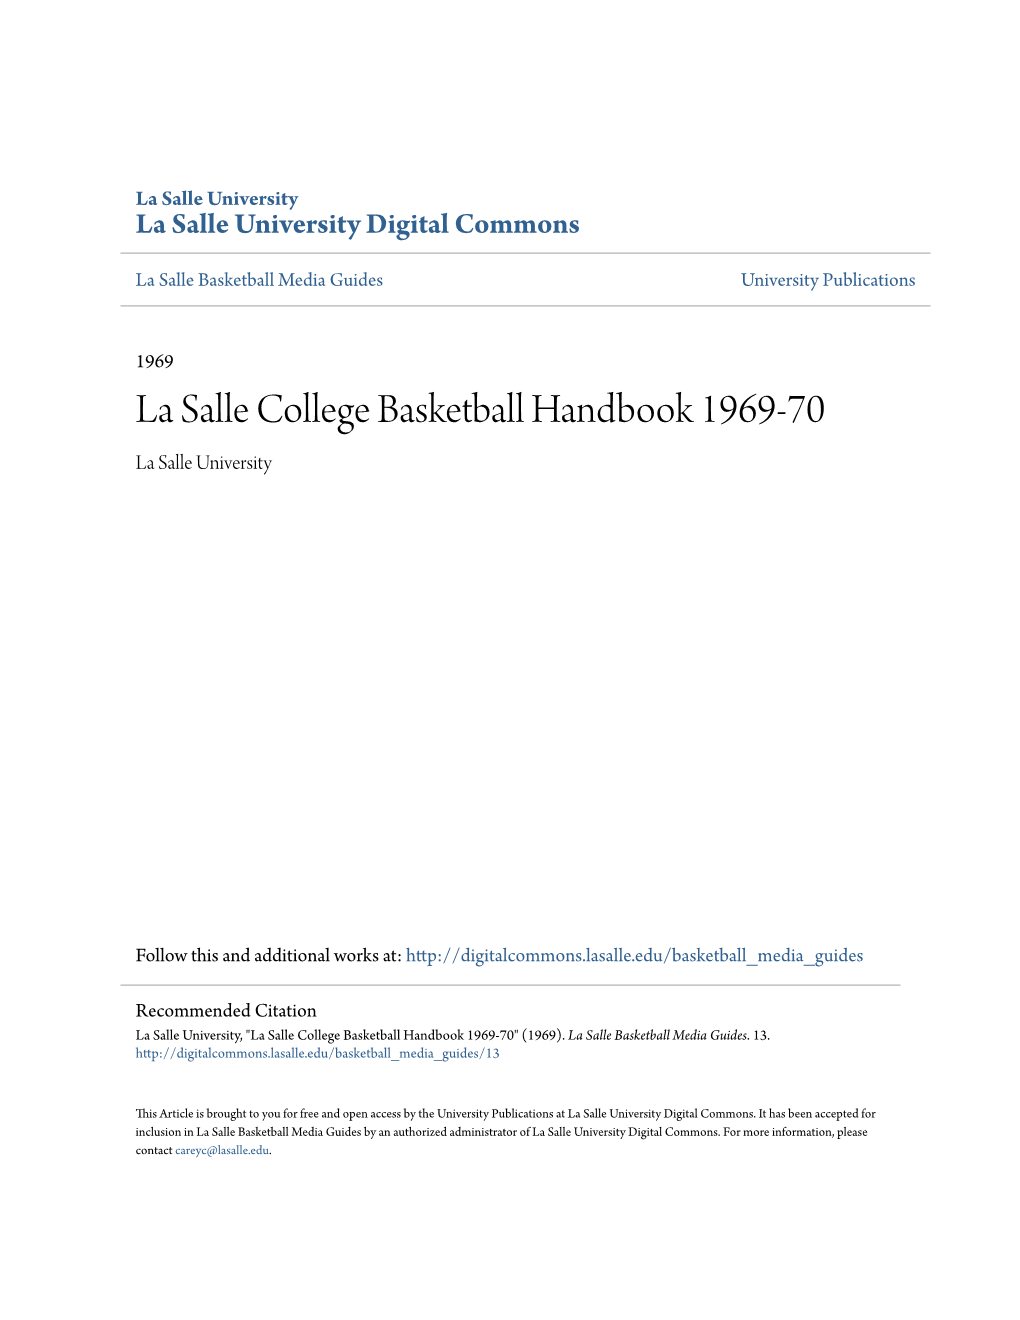 La Salle College Basketball Handbook 1969-70 La Salle University